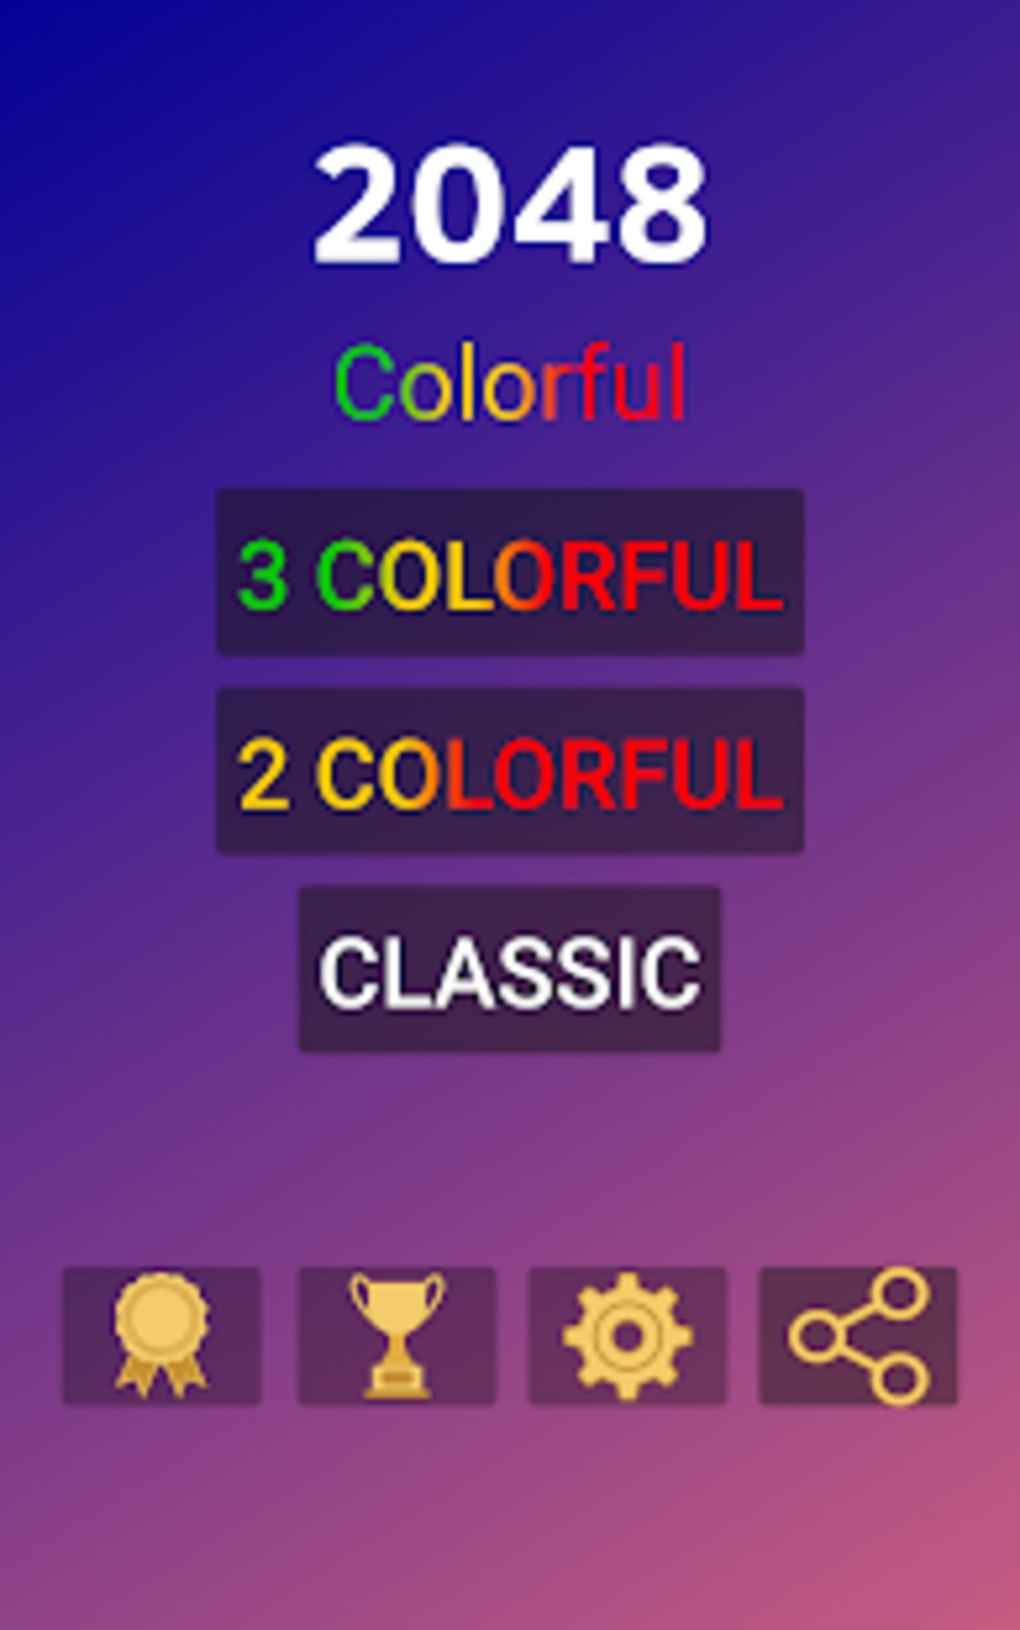 Color Planet - Jogo de colorir con números grátis - Download do APK para  Android